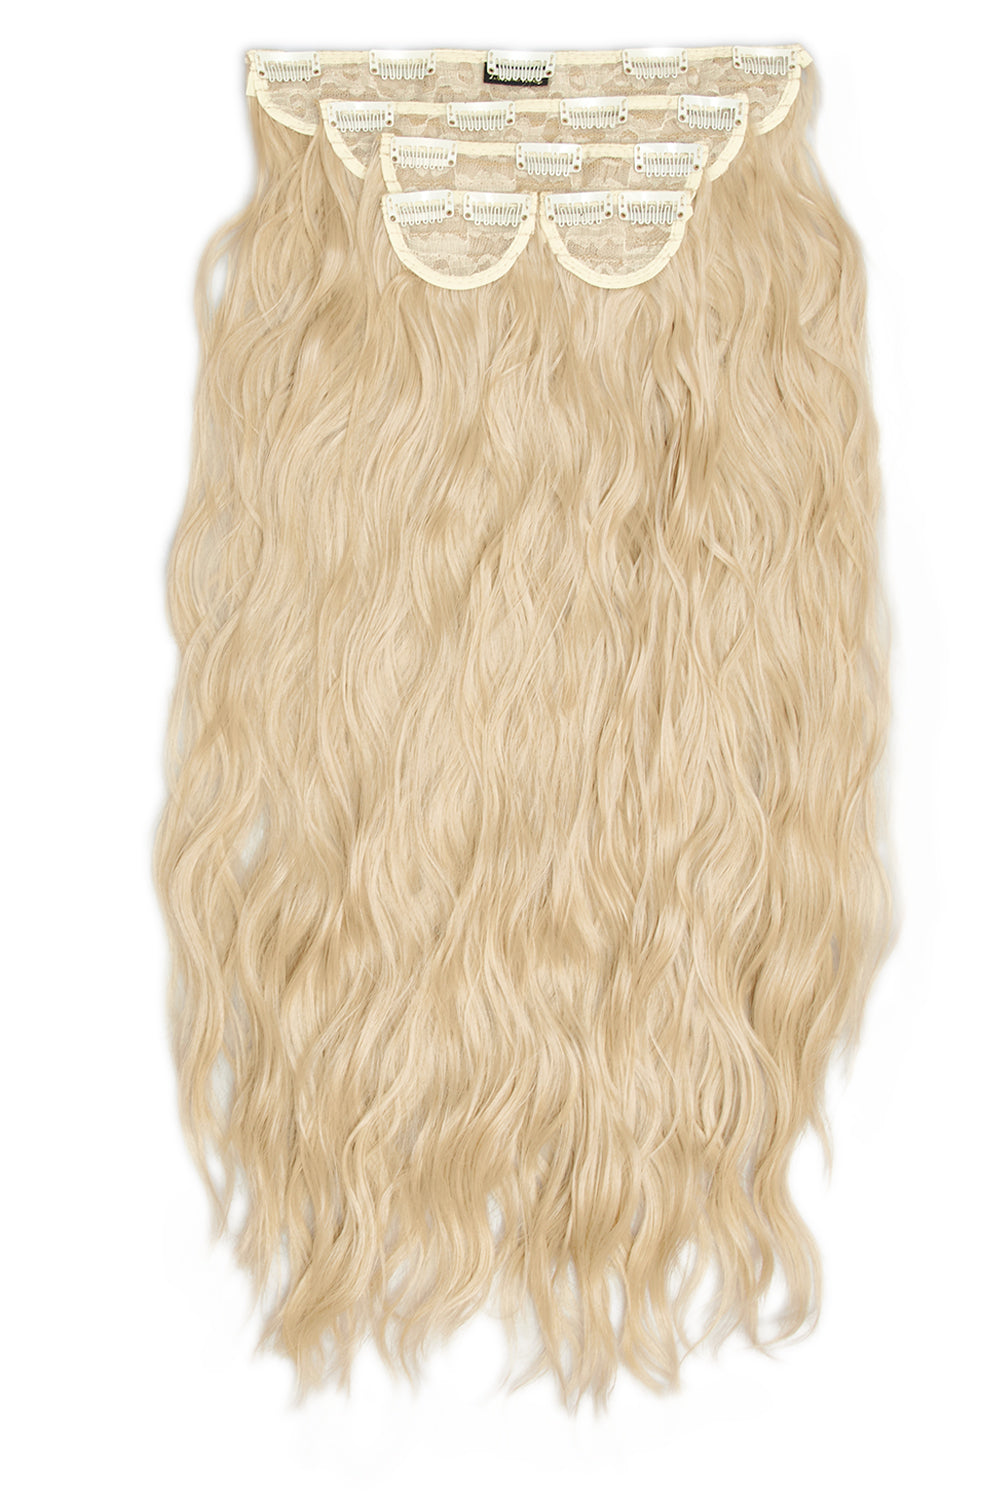 Super Thick 26" 5 Piece Waist Length Wave Clip In Hair Extensions - LullaBellz  - Light Blonde Festival Hair Inspiration